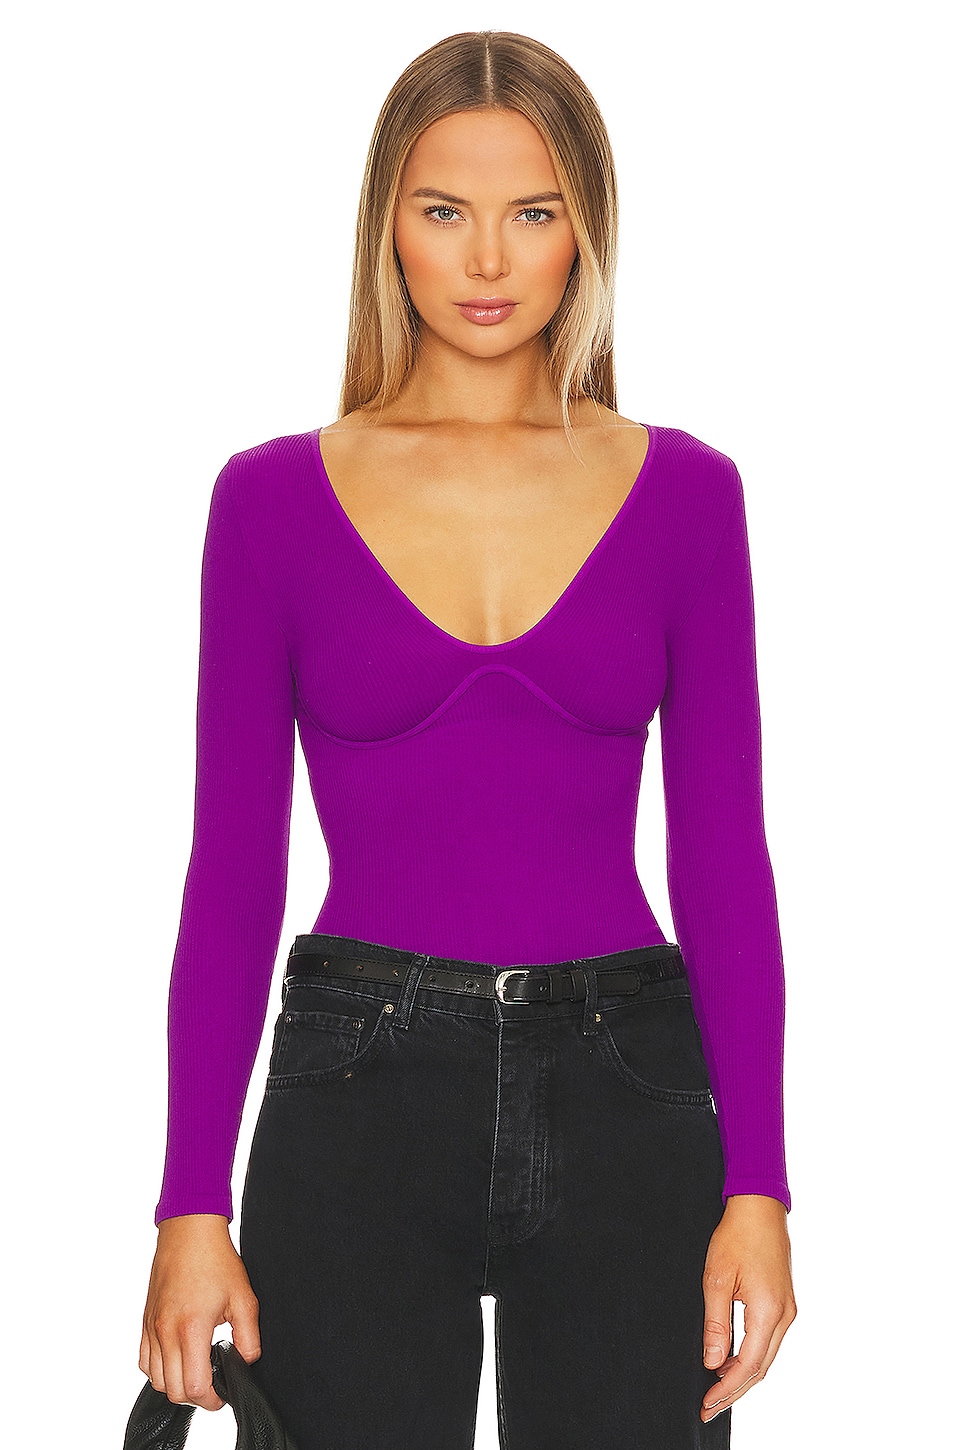 INTIMATELY FREE PEOPLE Womens Purple Bodysuit XS 